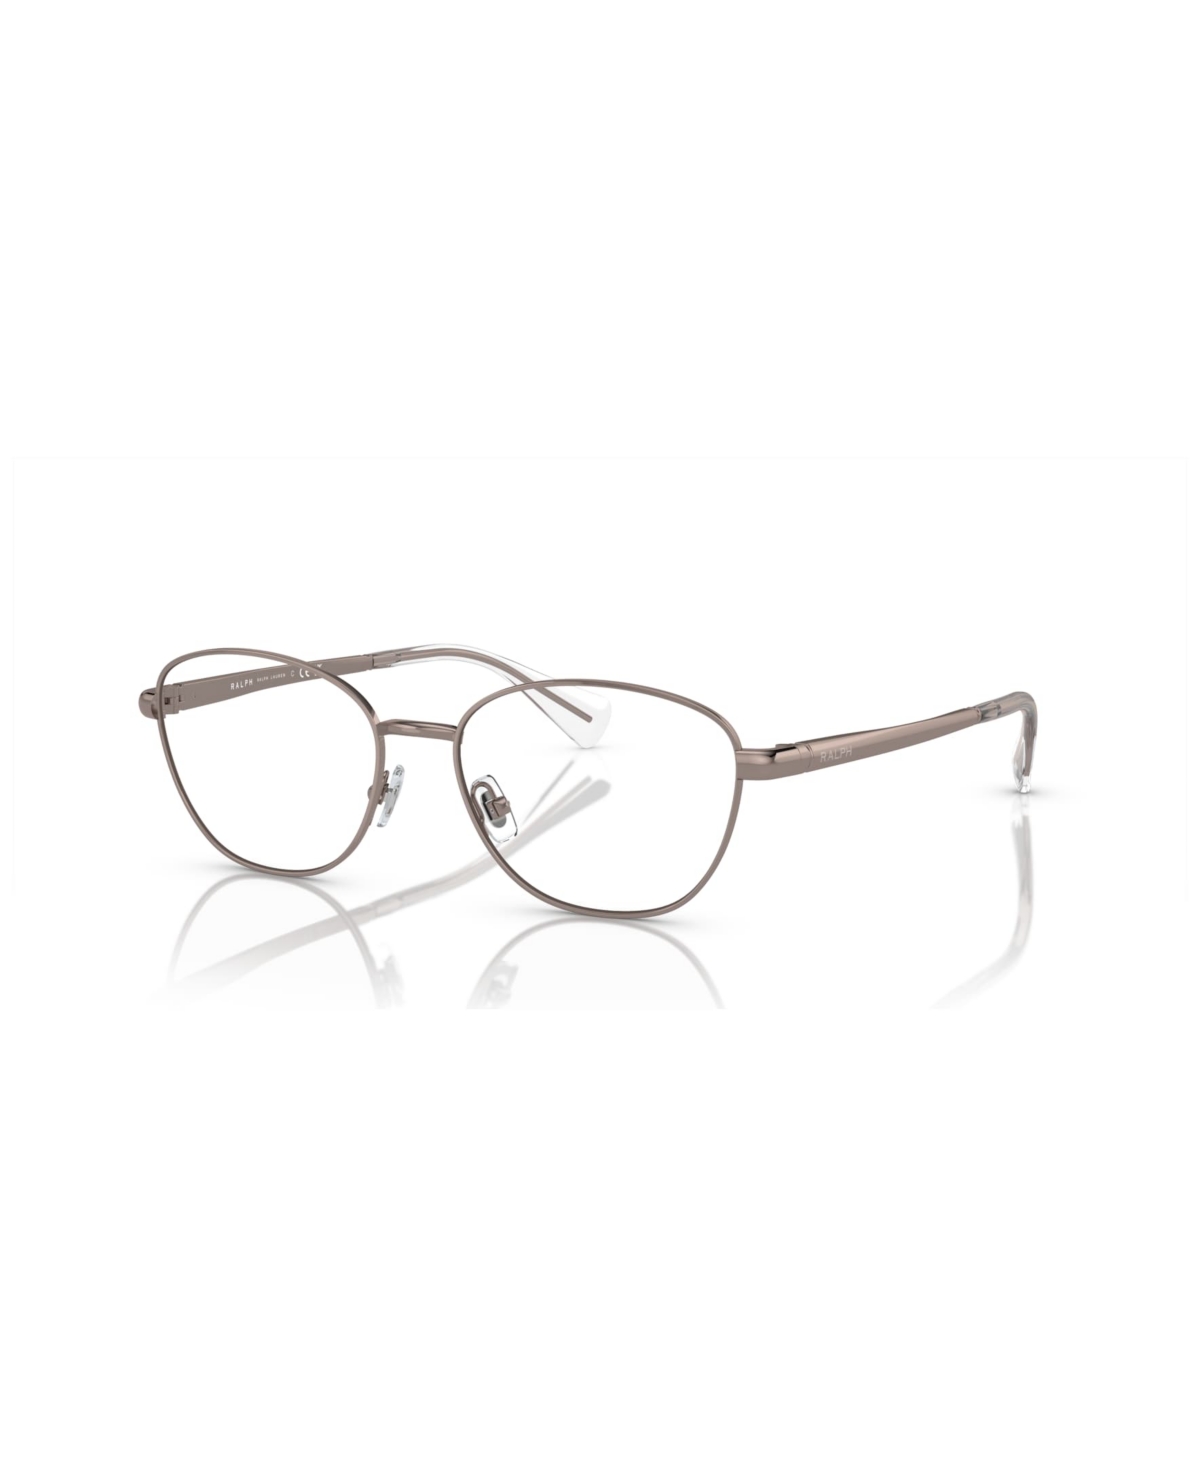 Women's Eyeglasses, RA6057 - Shiny Pale Gold